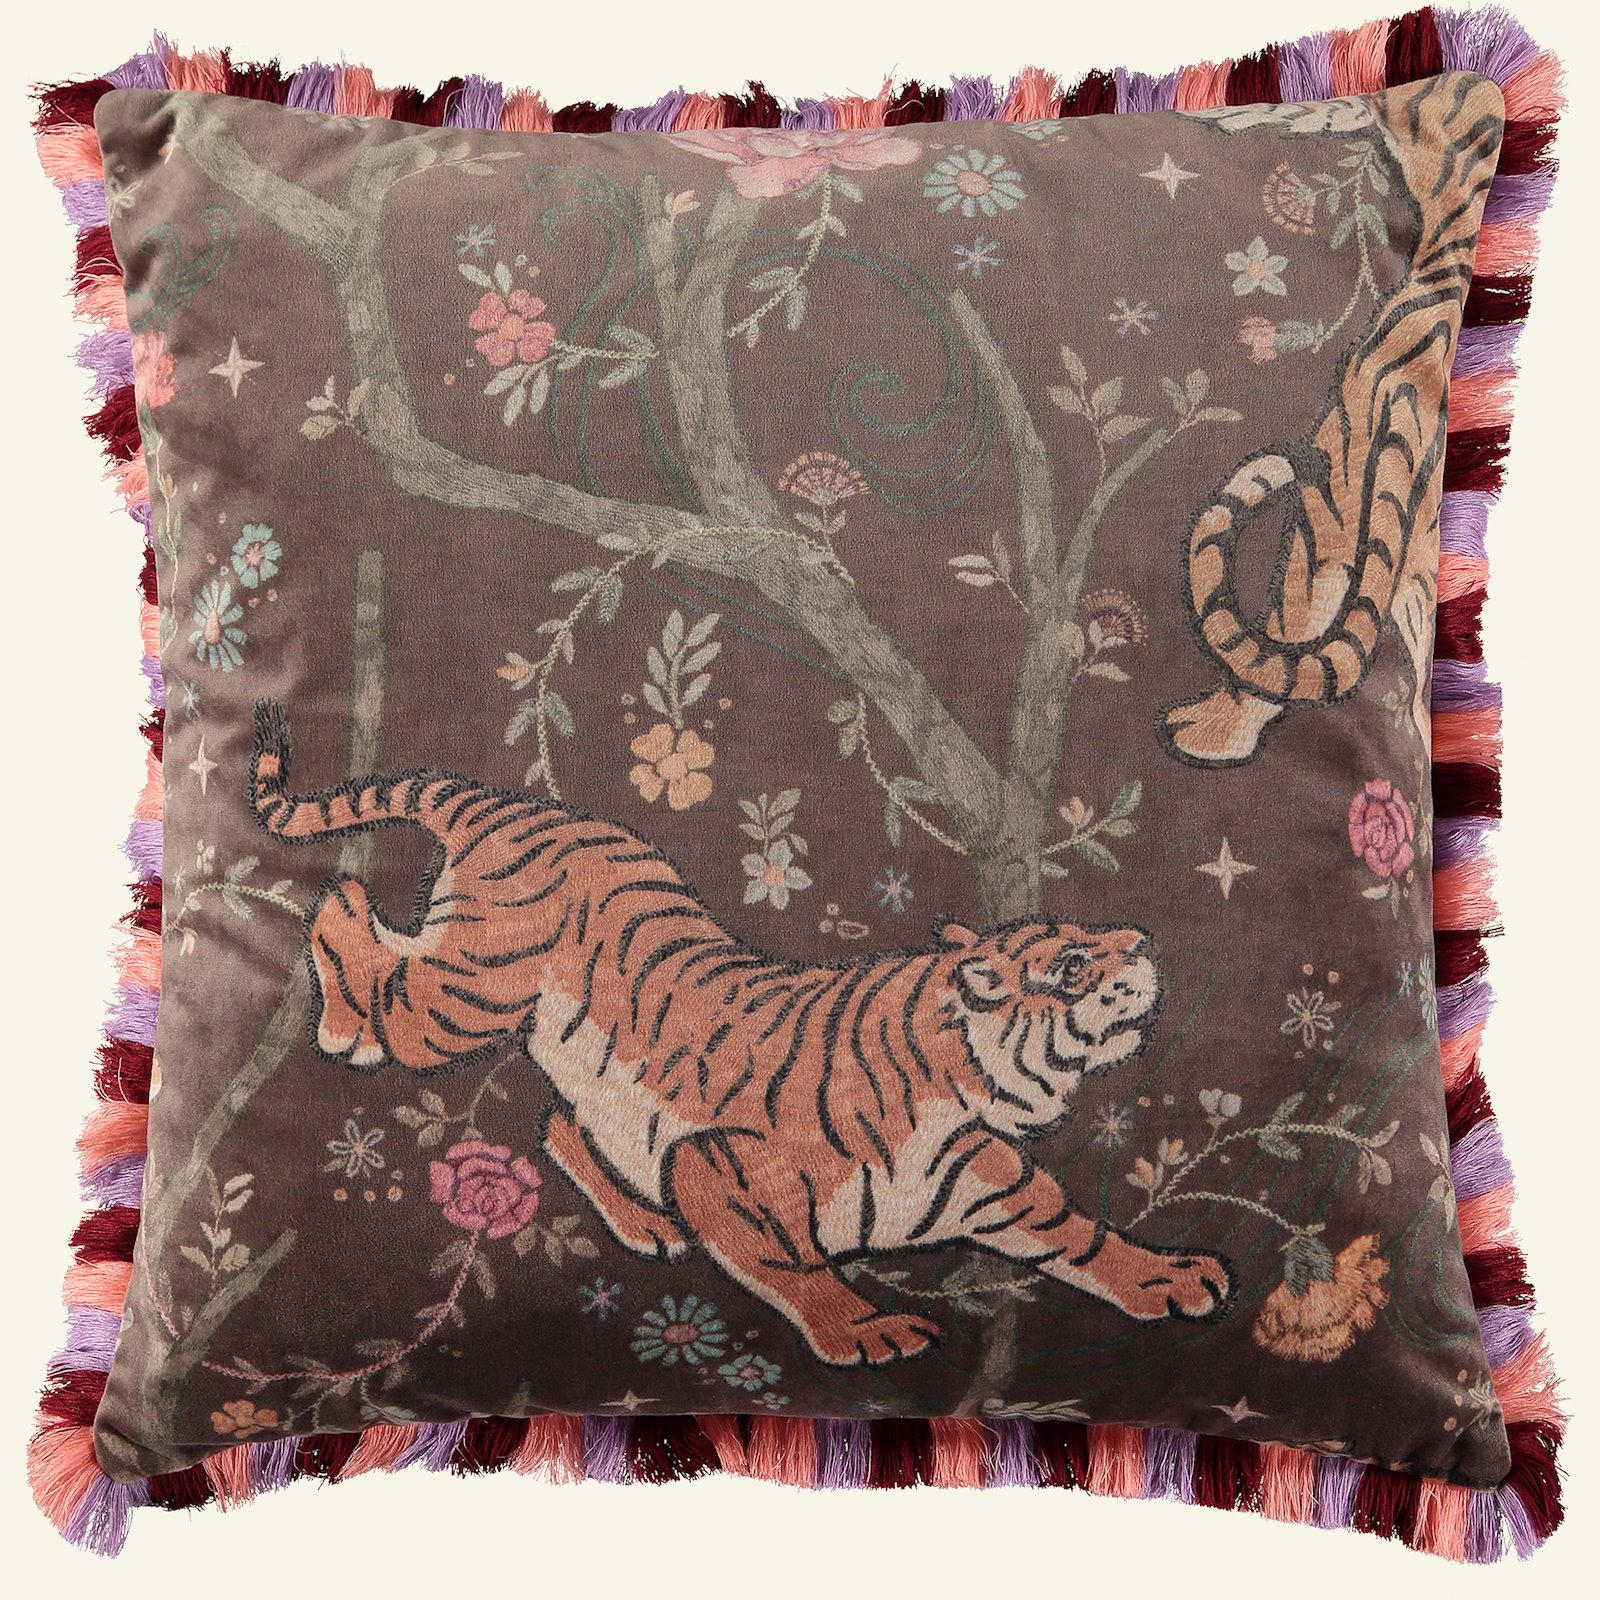 Upholstery velvet brown with tiger 826263_22363_sskit